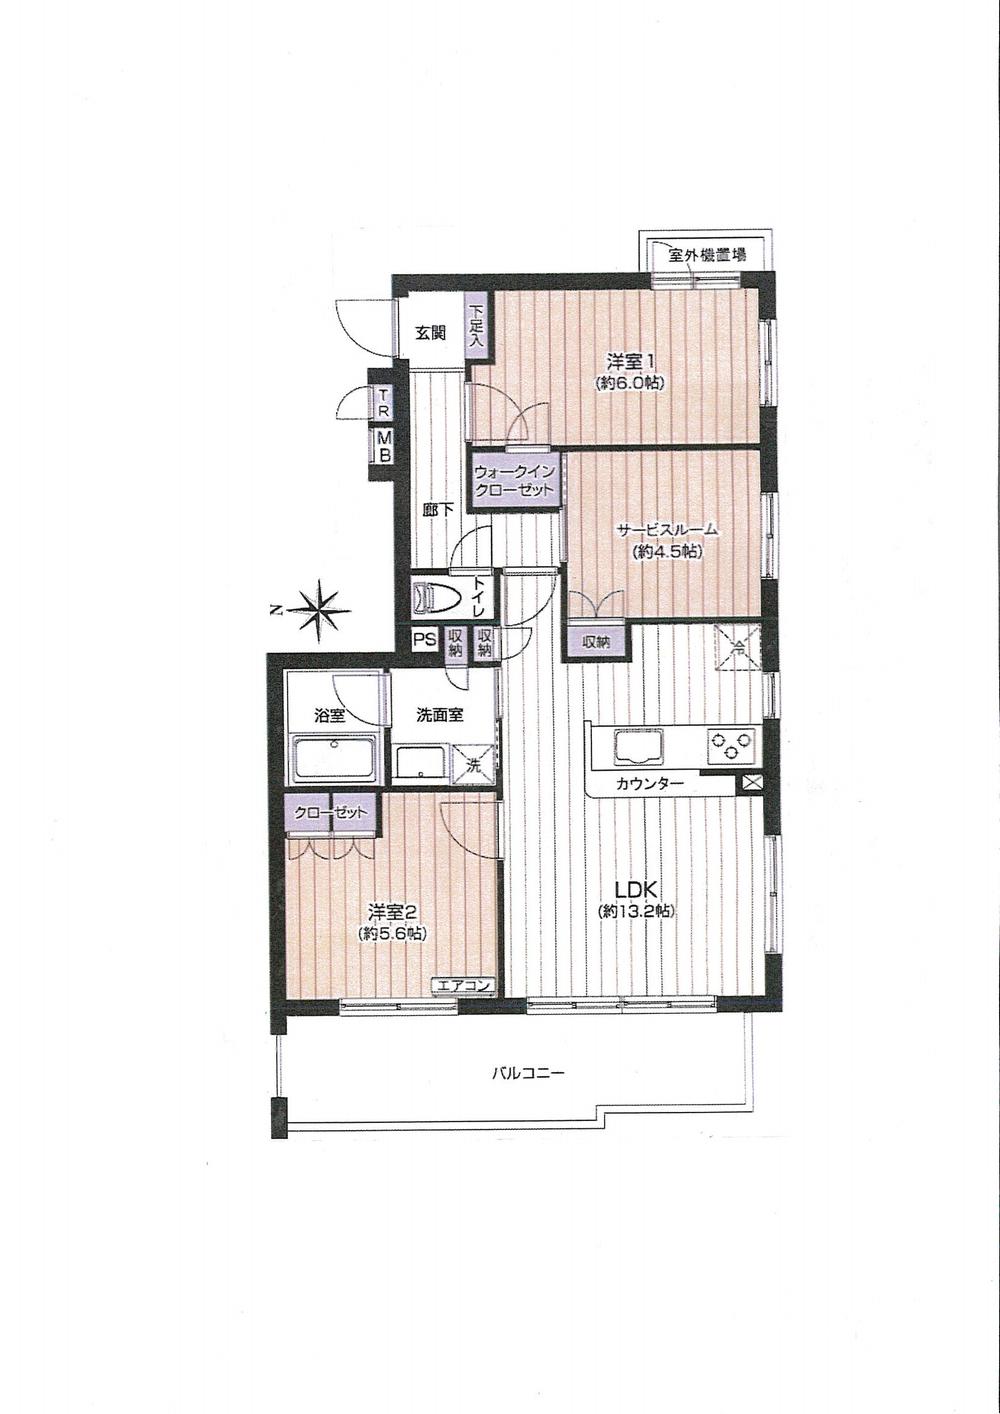 Floor plan. 2LDK + S (storeroom), Price 29.4 million yen, Occupied area 63.69 sq m , Balcony area 10.8 sq m